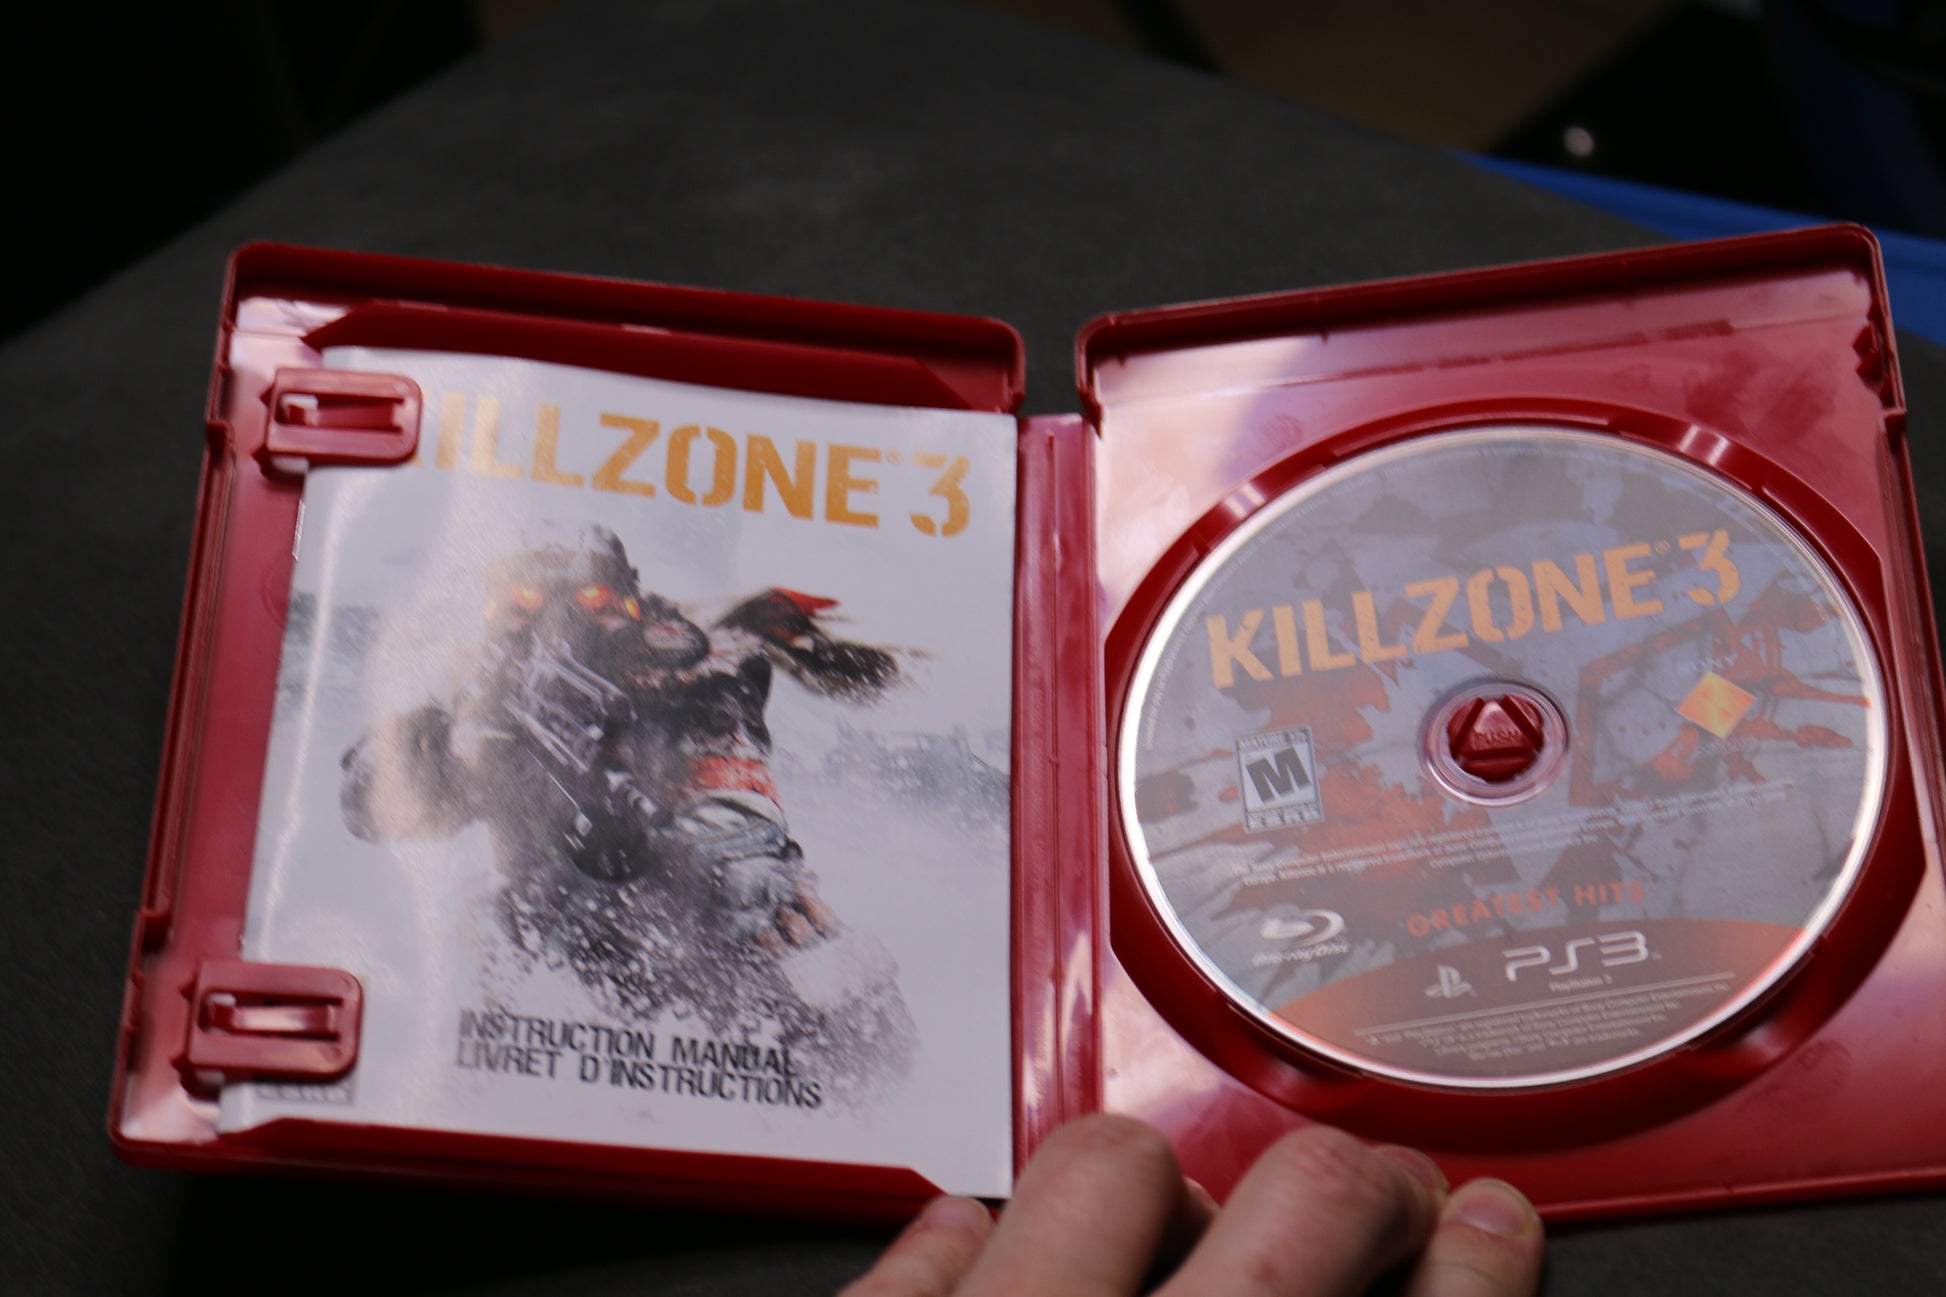 Buy Killzone 3 PS3 Game Code Compare Prices